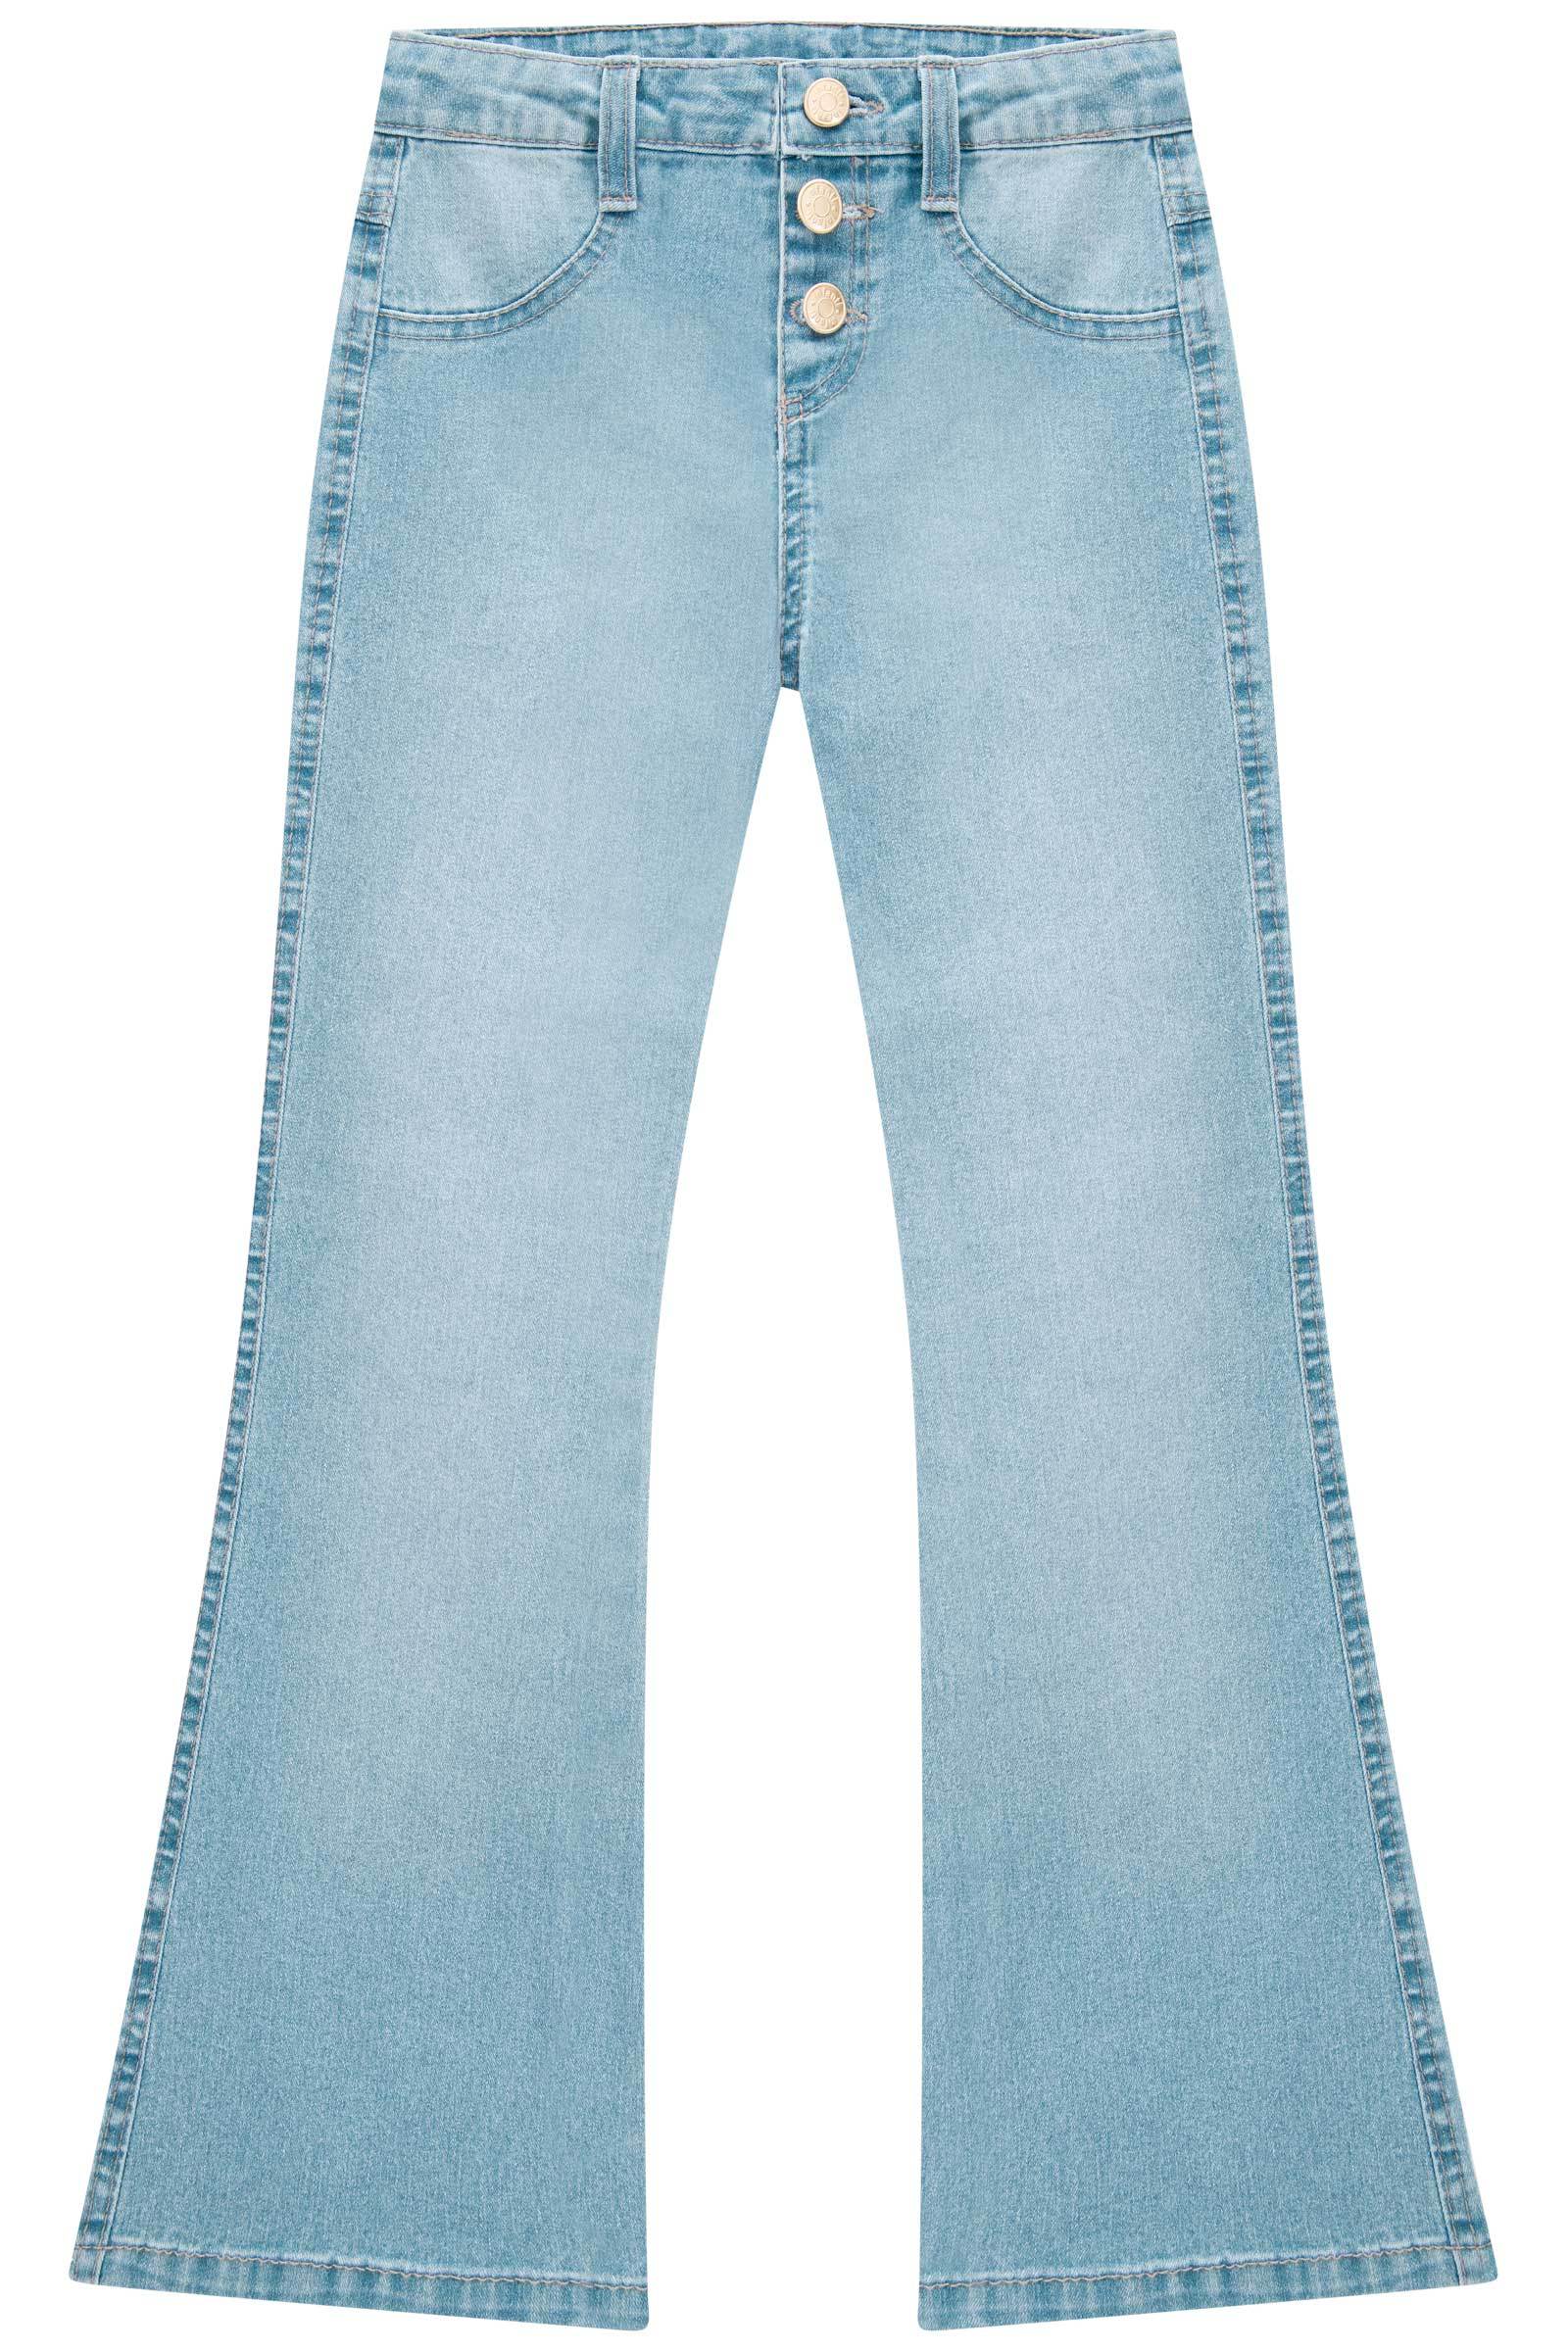 Calça Flare em Jeans Bellini com Elastano 74309 Infanti